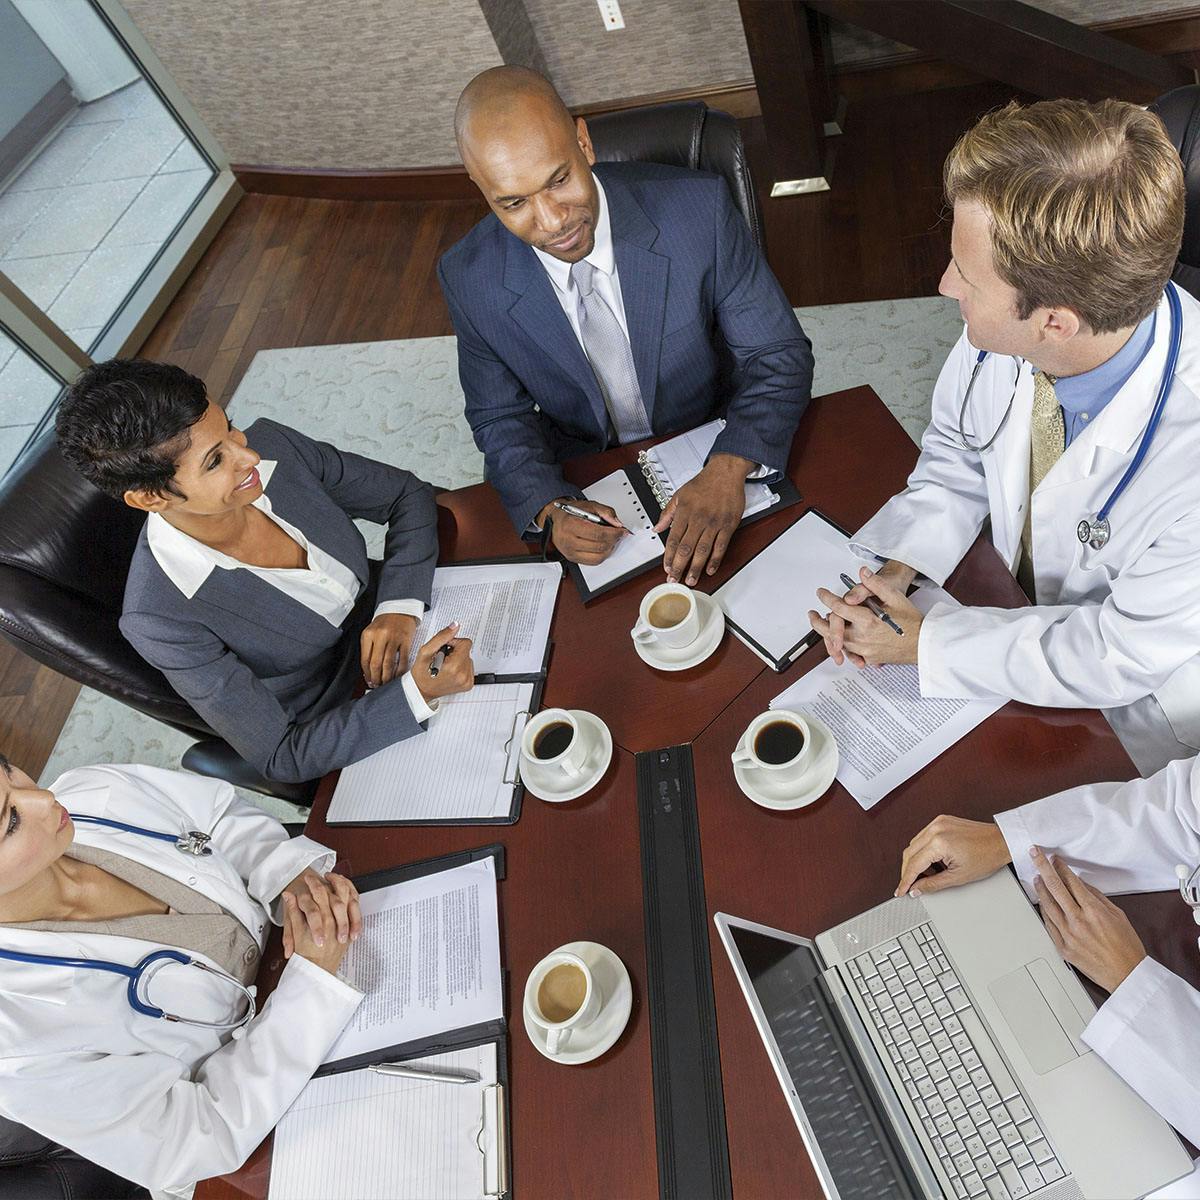 Interracial group of businessmen, businesswomen, and doctors meeting in hospital boardroom